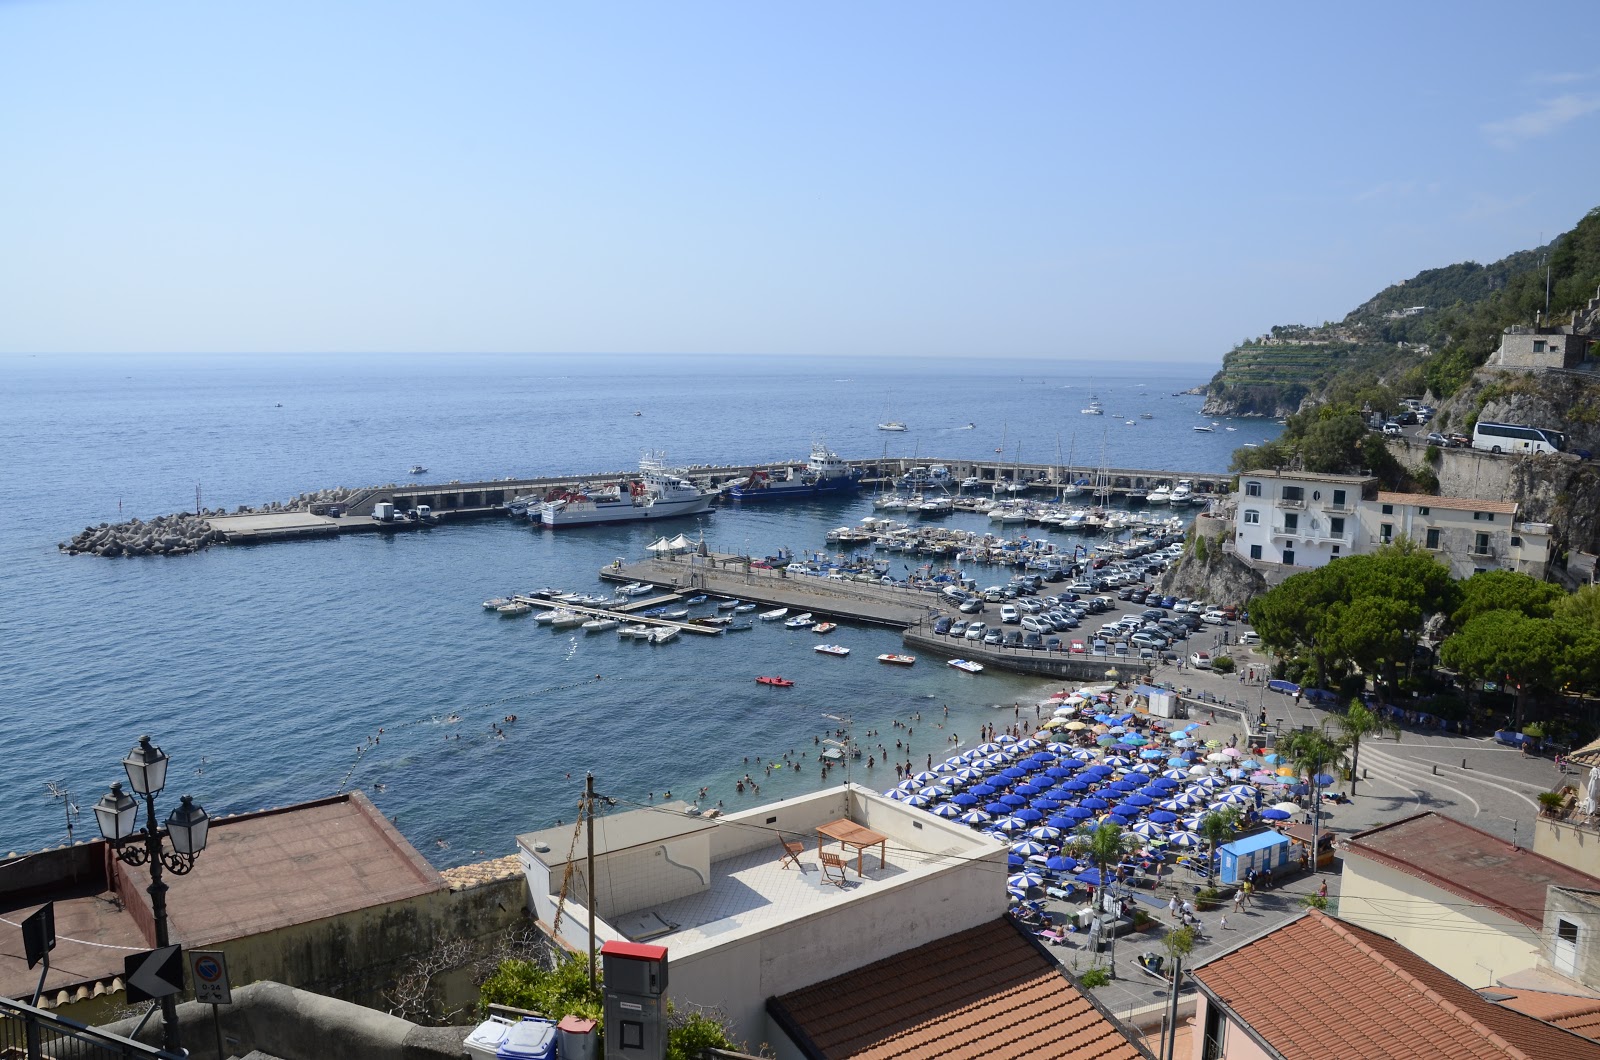 Spiaggia di Cetera'in fotoğrafı uçurumlarla desteklenmiş